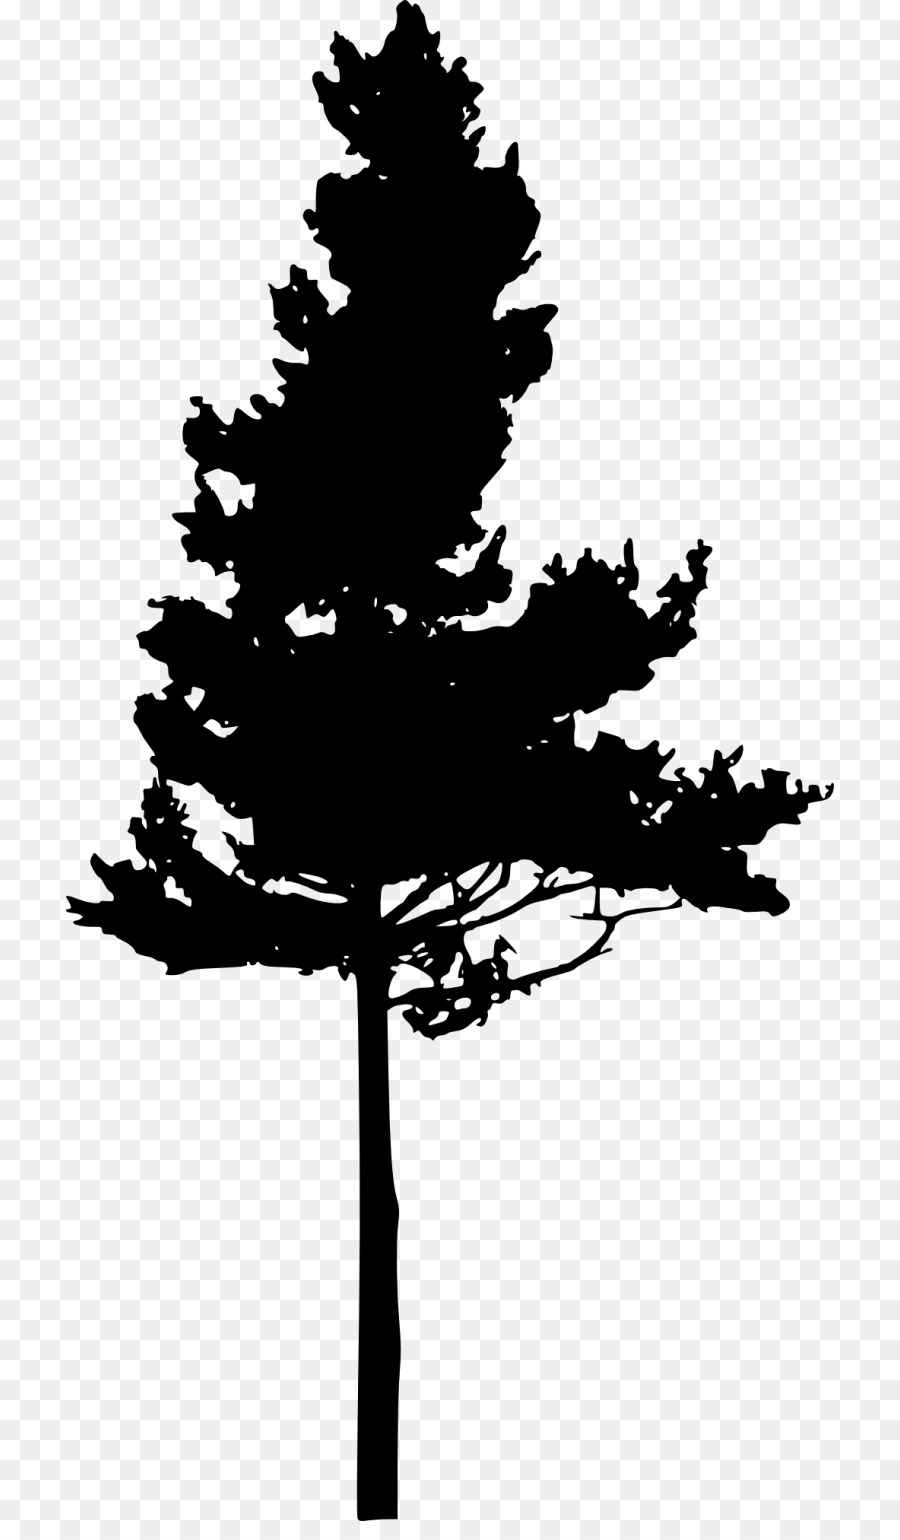 Pine Eastern hemlock Tree Clip art - heart tree png download - 768*1521 - Free Transparent Pine png Download.